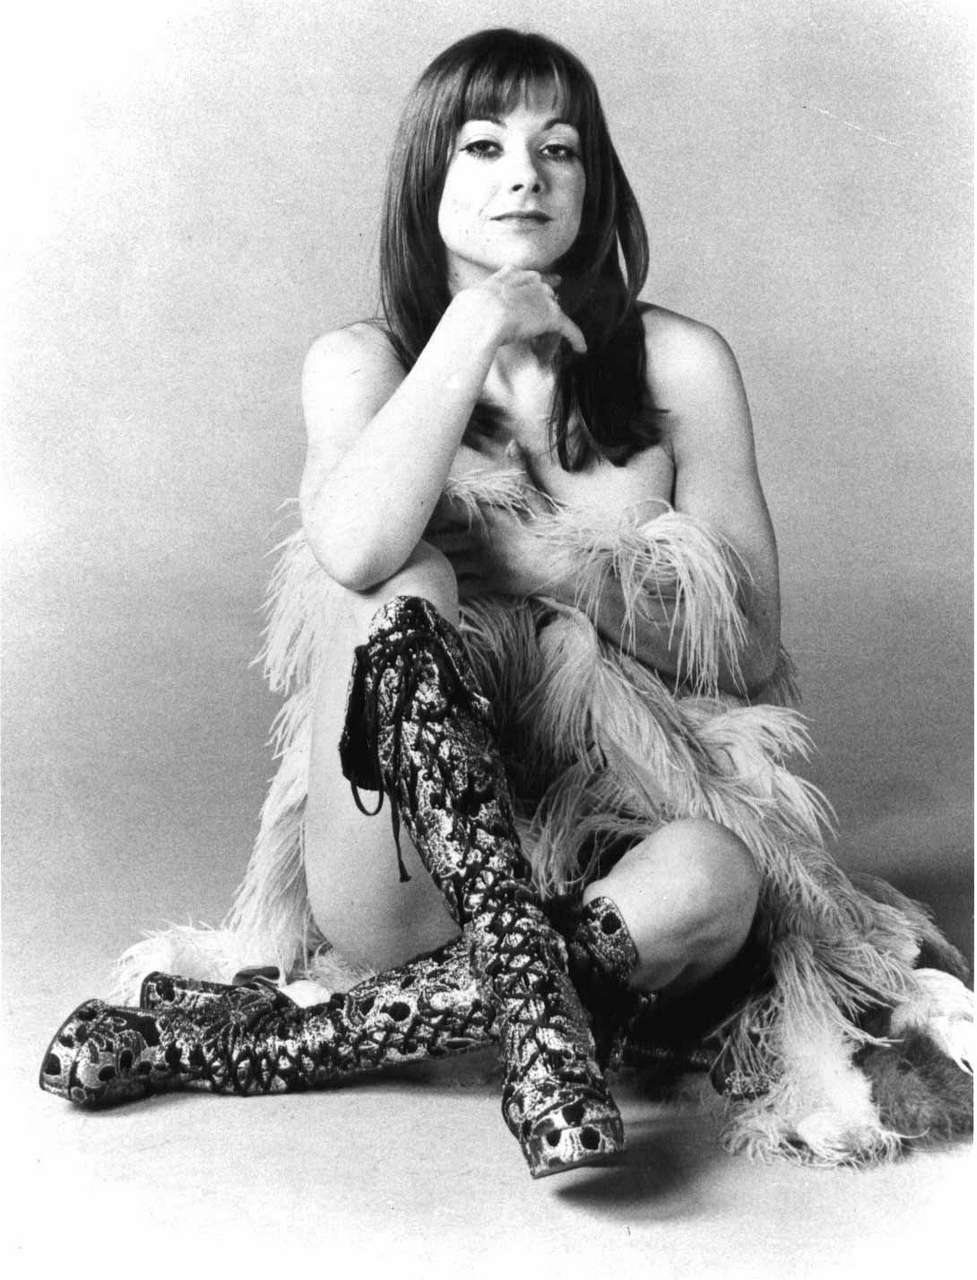 Sonja Kristina Lead Singer Of 70s Prog Rock Band Curved Air NSF